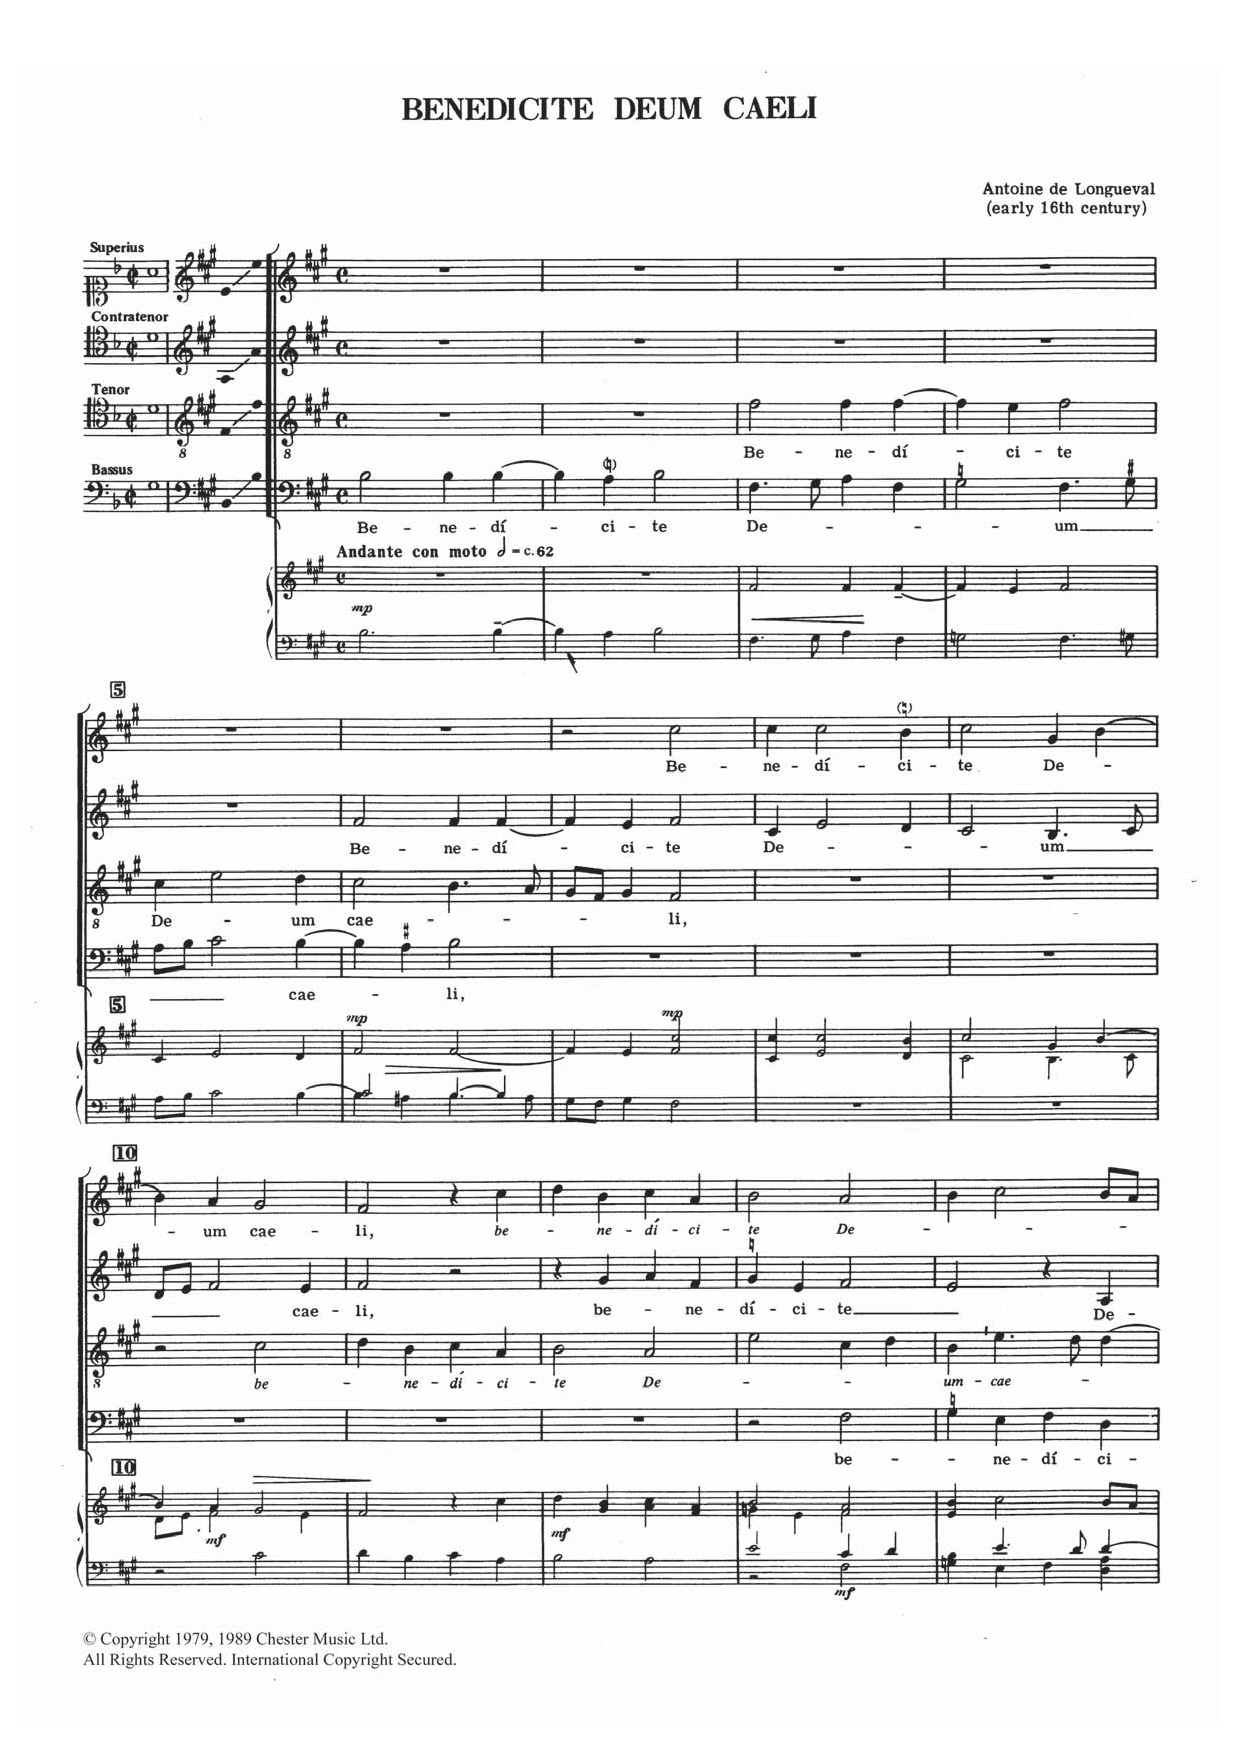 Antoine de Longueval Benedicte Deum Caeli Sheet Music Notes & Chords for SATB - Download or Print PDF